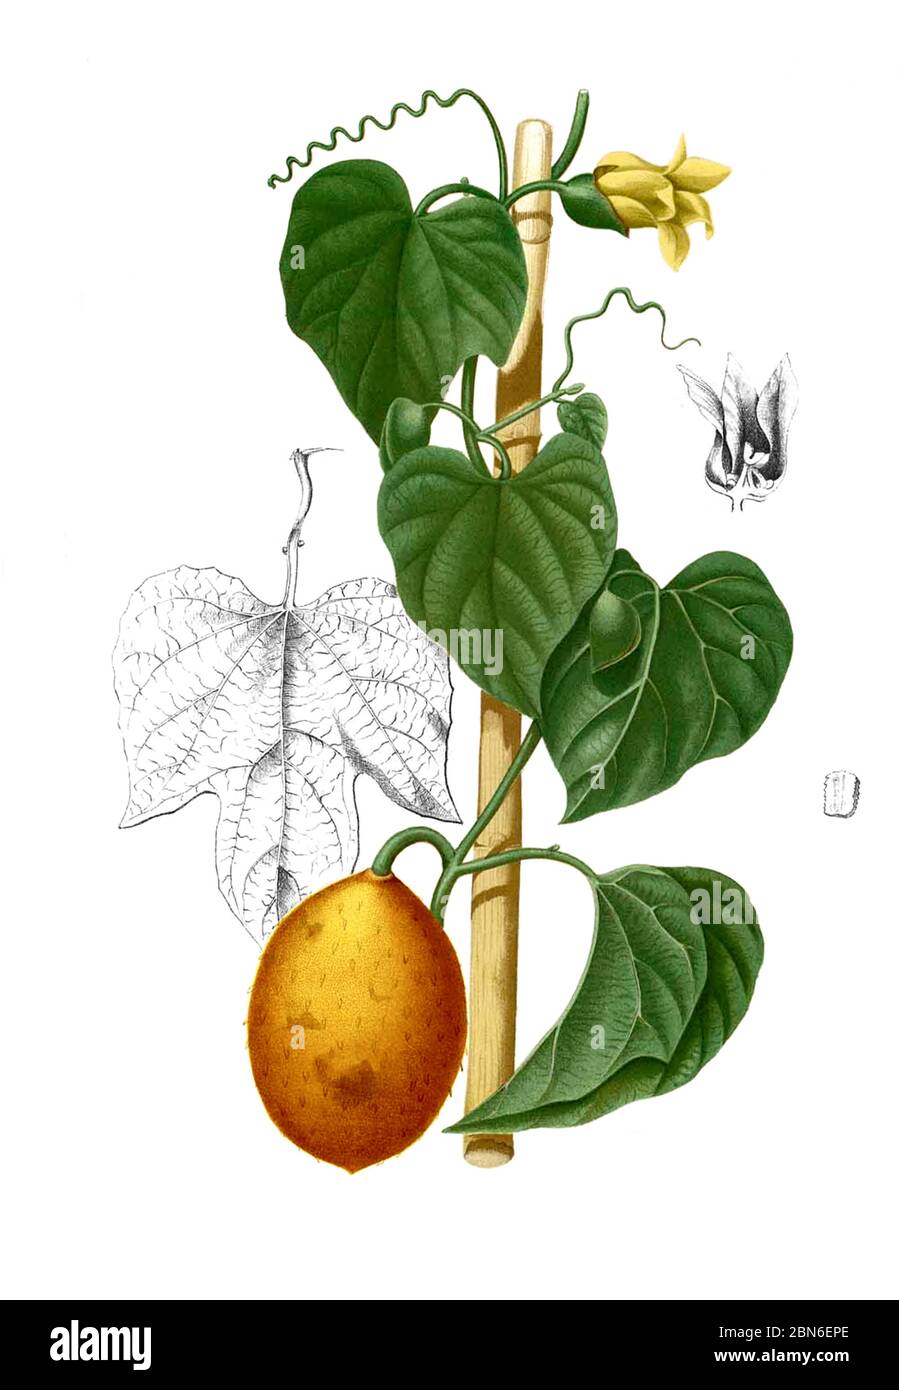 Vietnam / Philippines: Gac fruit (Momordica cochinchinensis), from Francisco Manuel Blanco's Flora de Filipinas, 1883.  Gấc (Momordica cochinchinensis Stock Photo